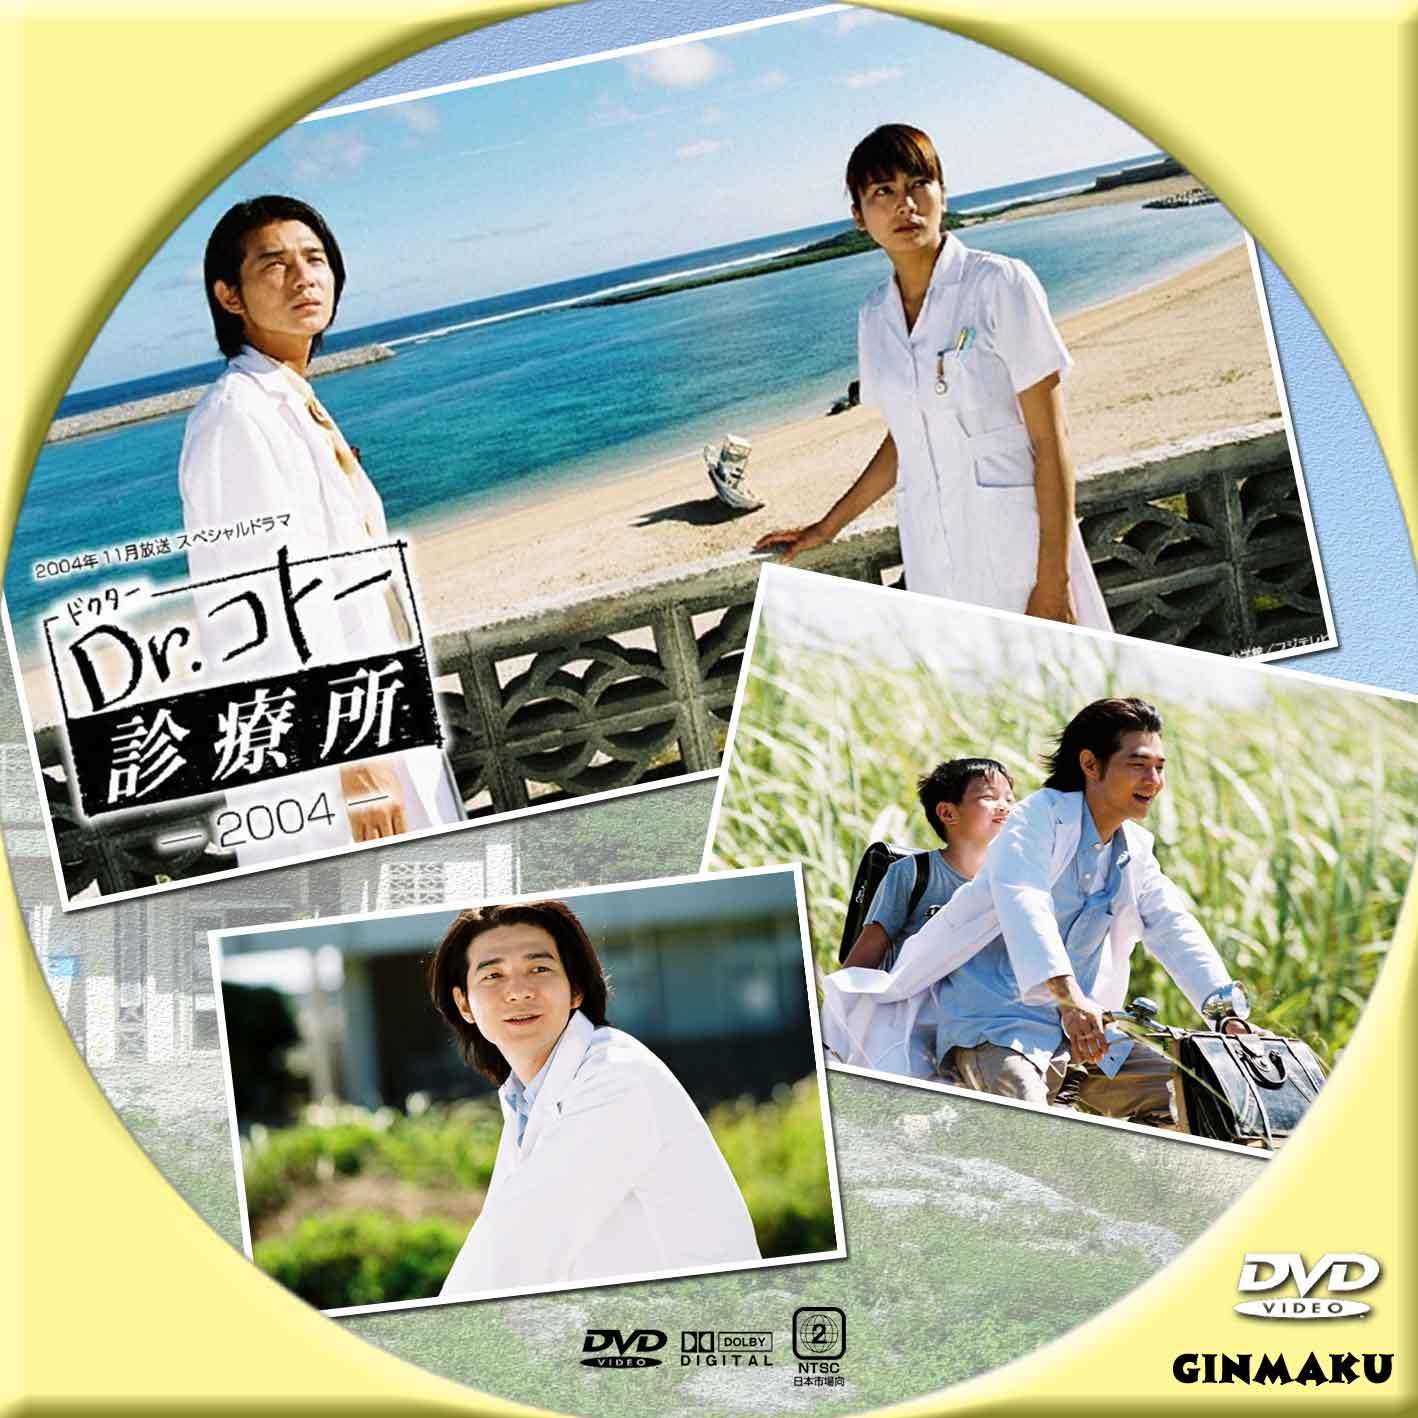 Dr.コトー診療所2004 DVD BOX o7r6kf1 - www.sorbillomenu.com